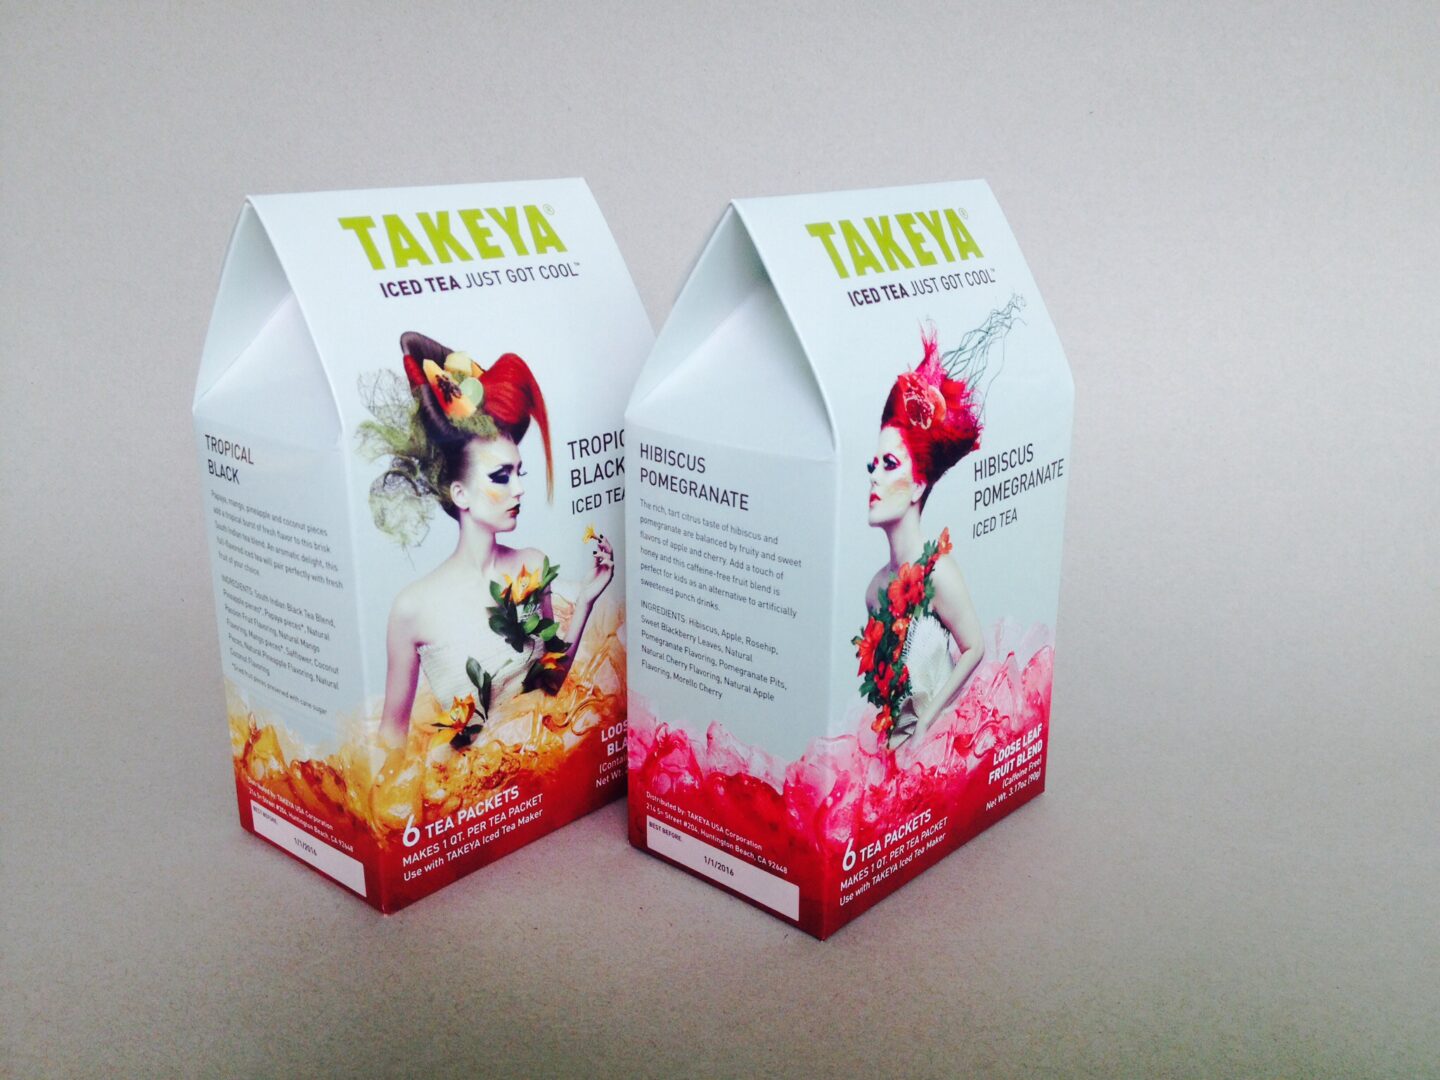 Boxes of Takeya iced tea